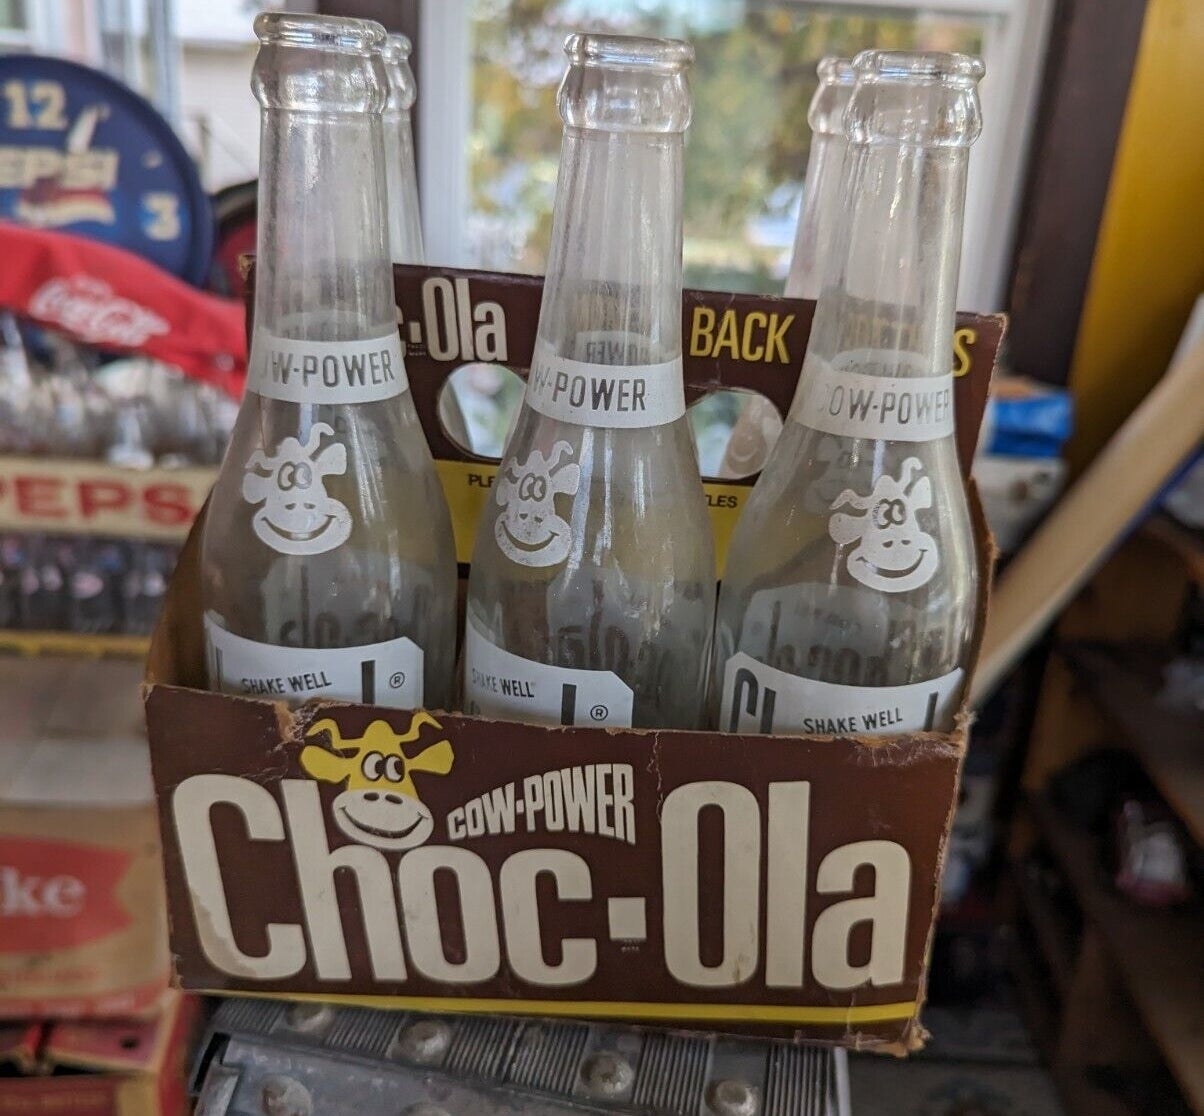 Choc-Ola bottles